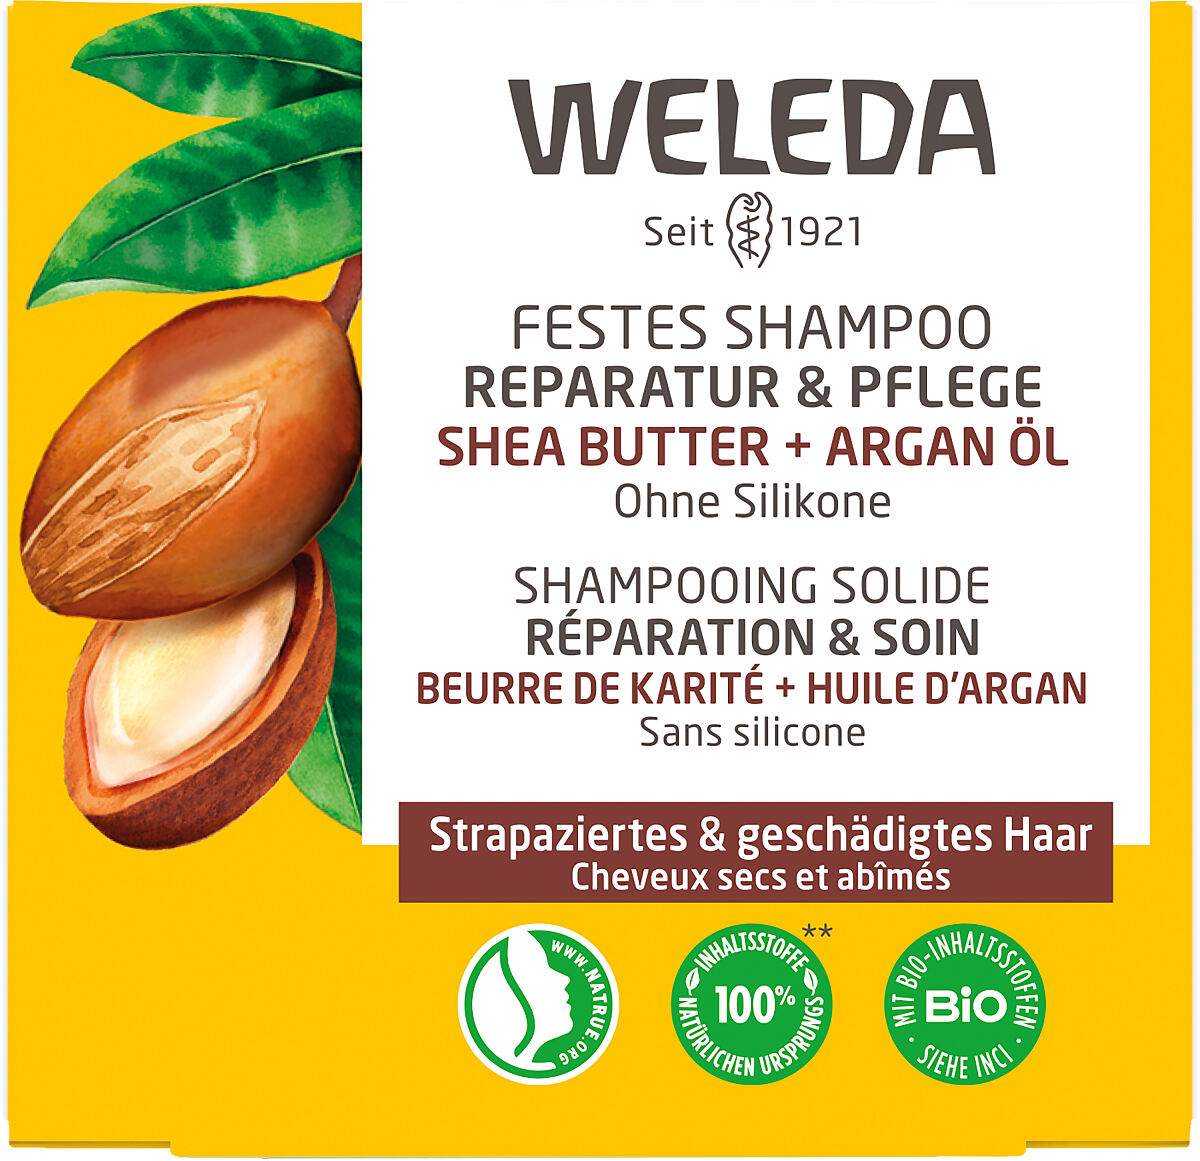 WELEDA_Festes Shampoo_Reparatur & Pflege_50 g_UVP € 5,95